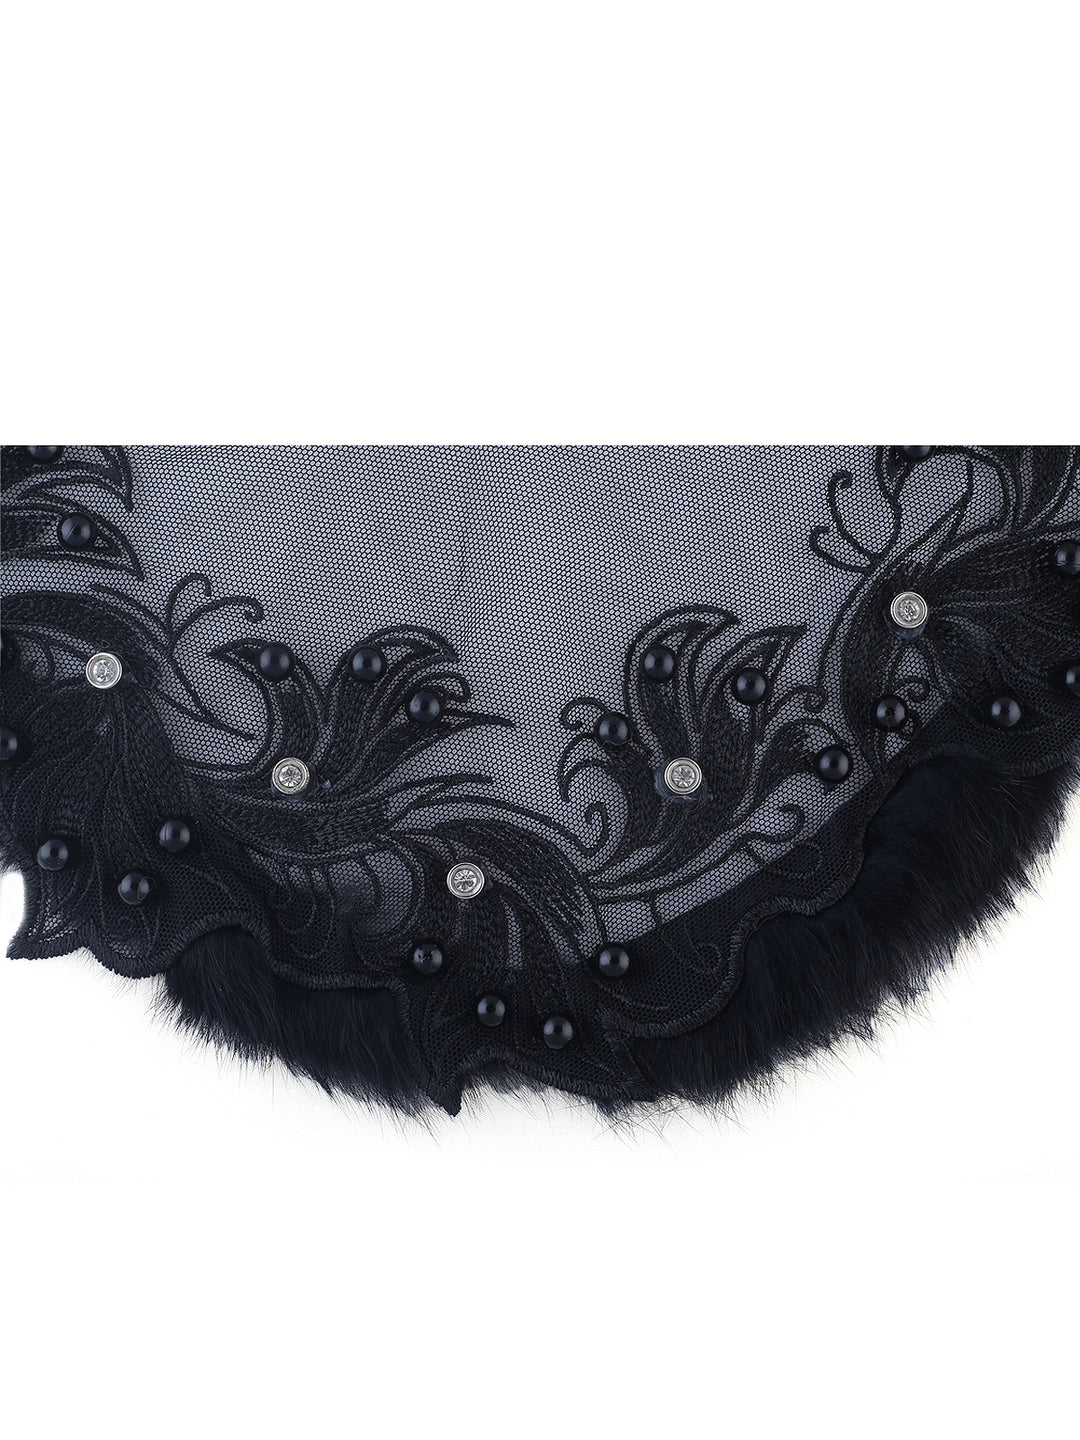 Designer Black Embroidery Neck with Fur Edge